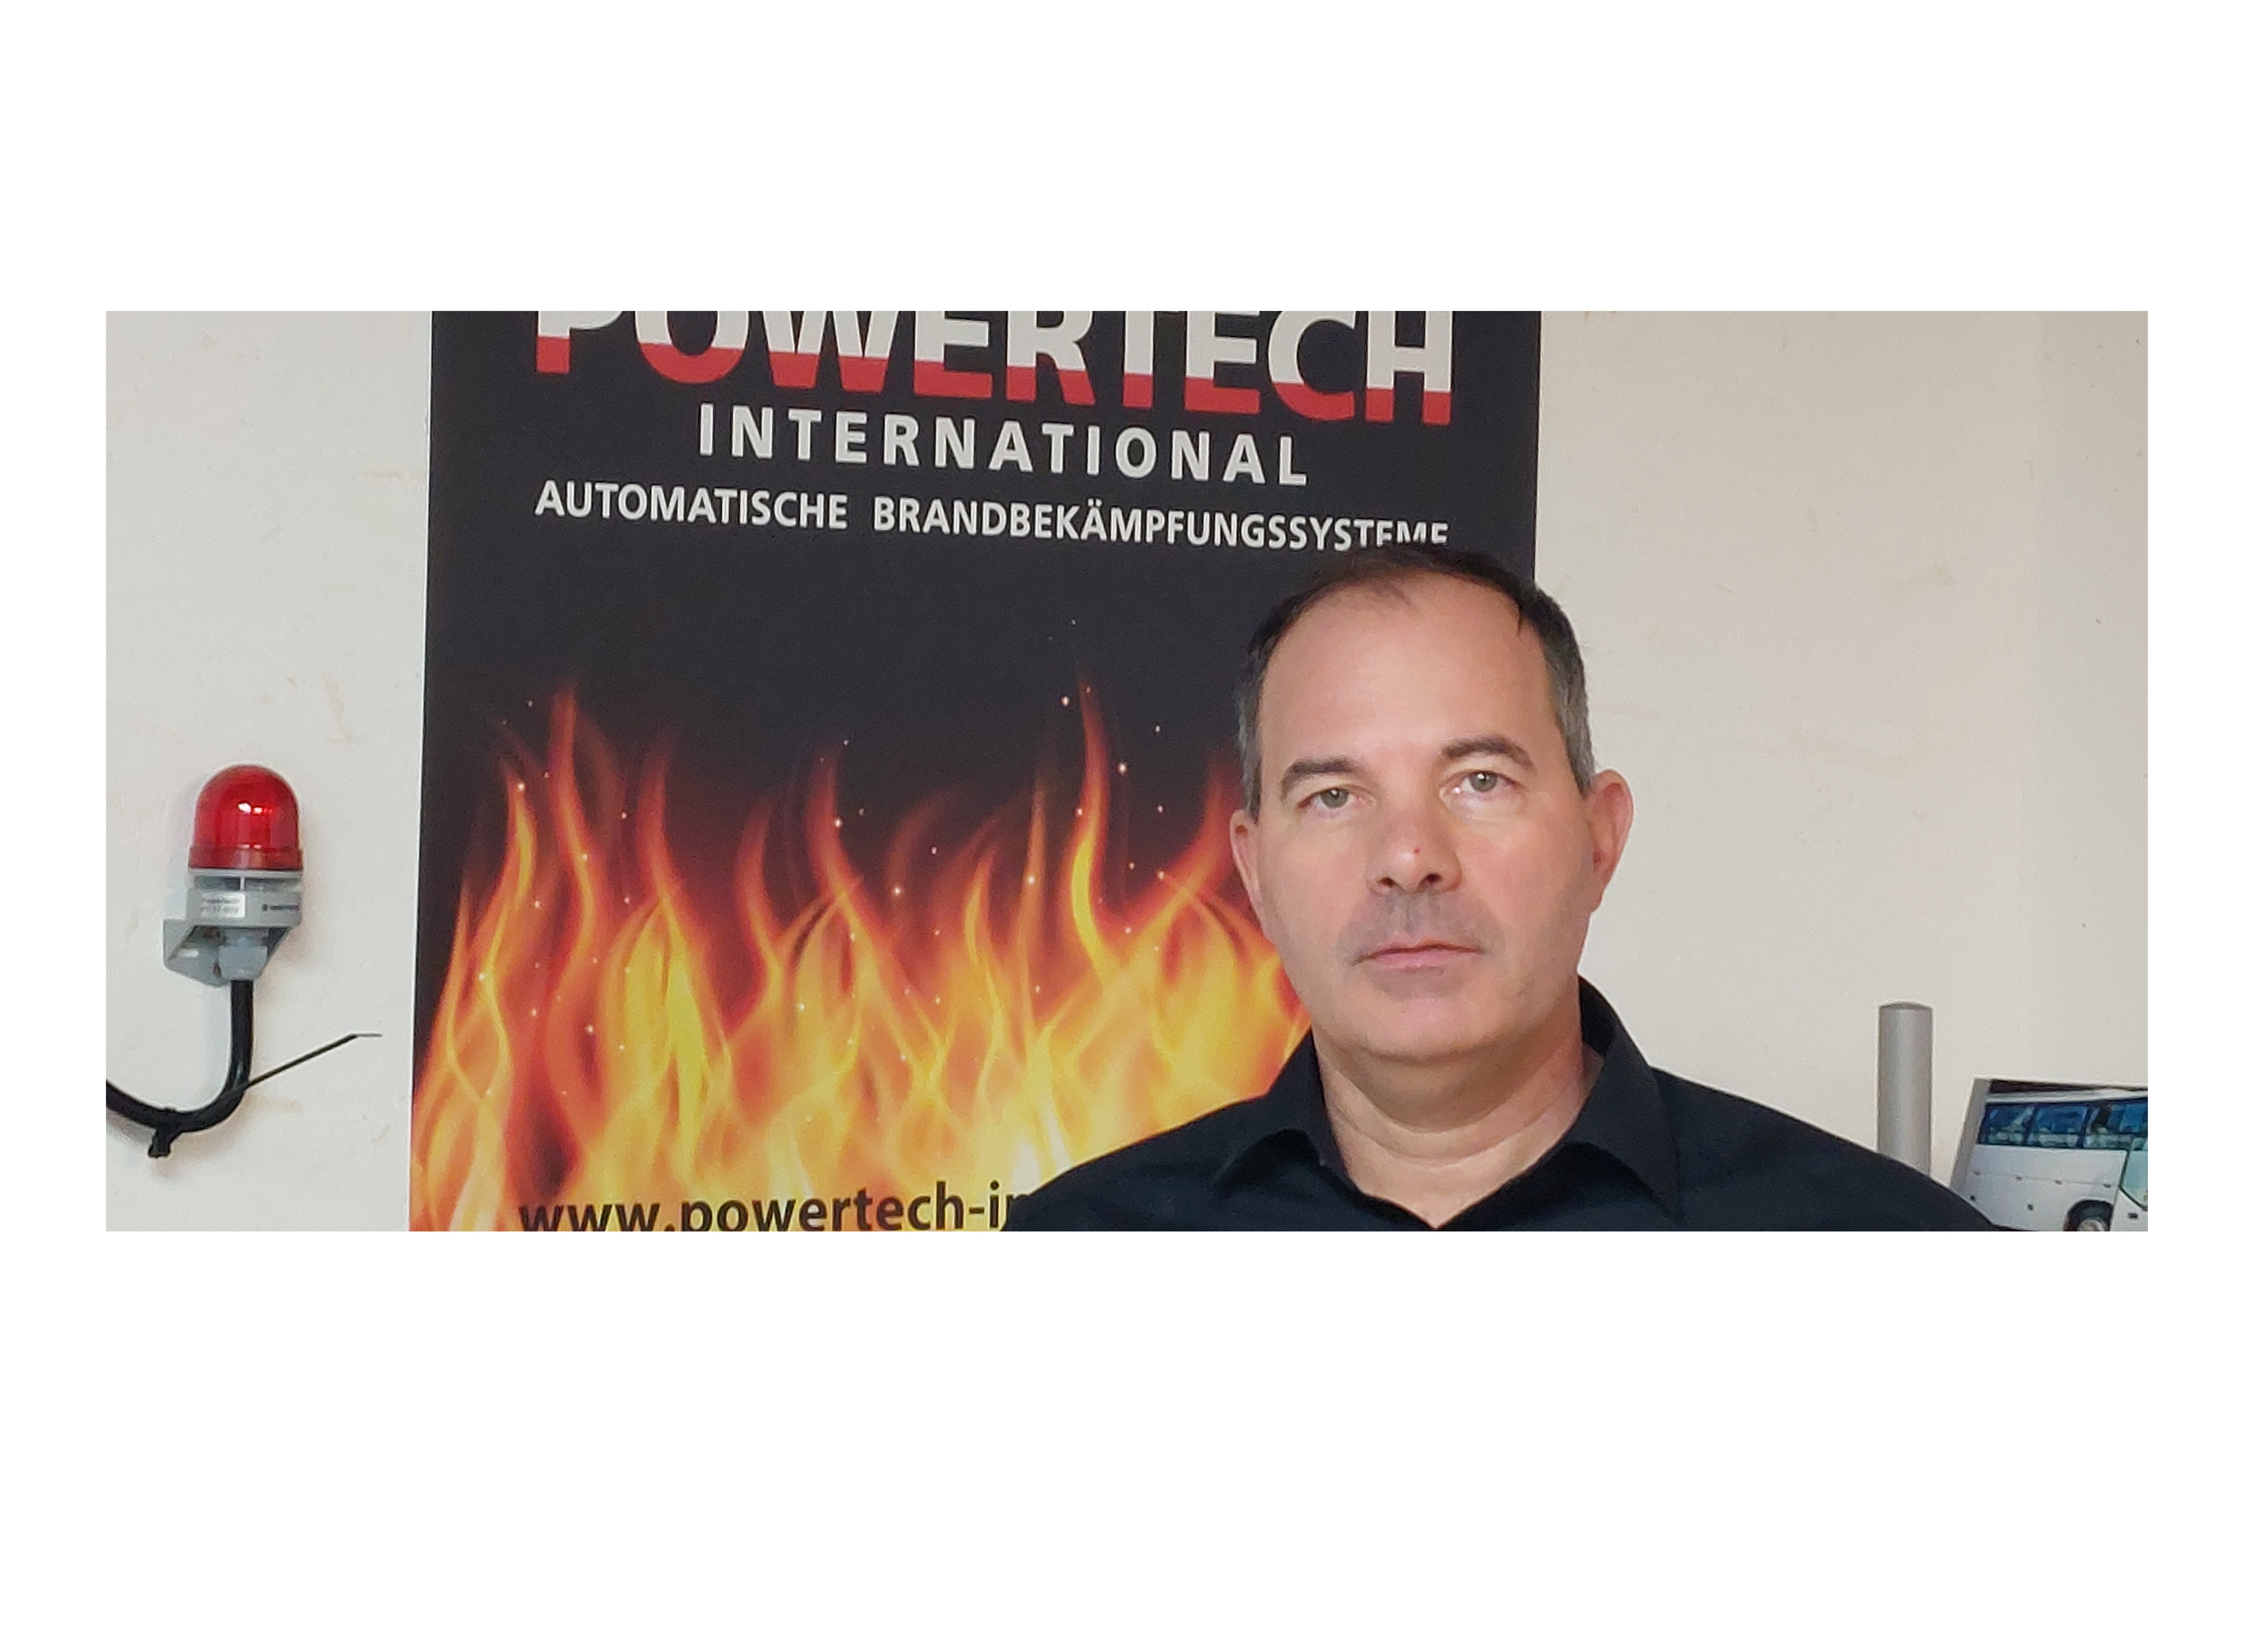  Mr. Mario Sauer, Founder and Managing Director of POWERTECH International GmbH